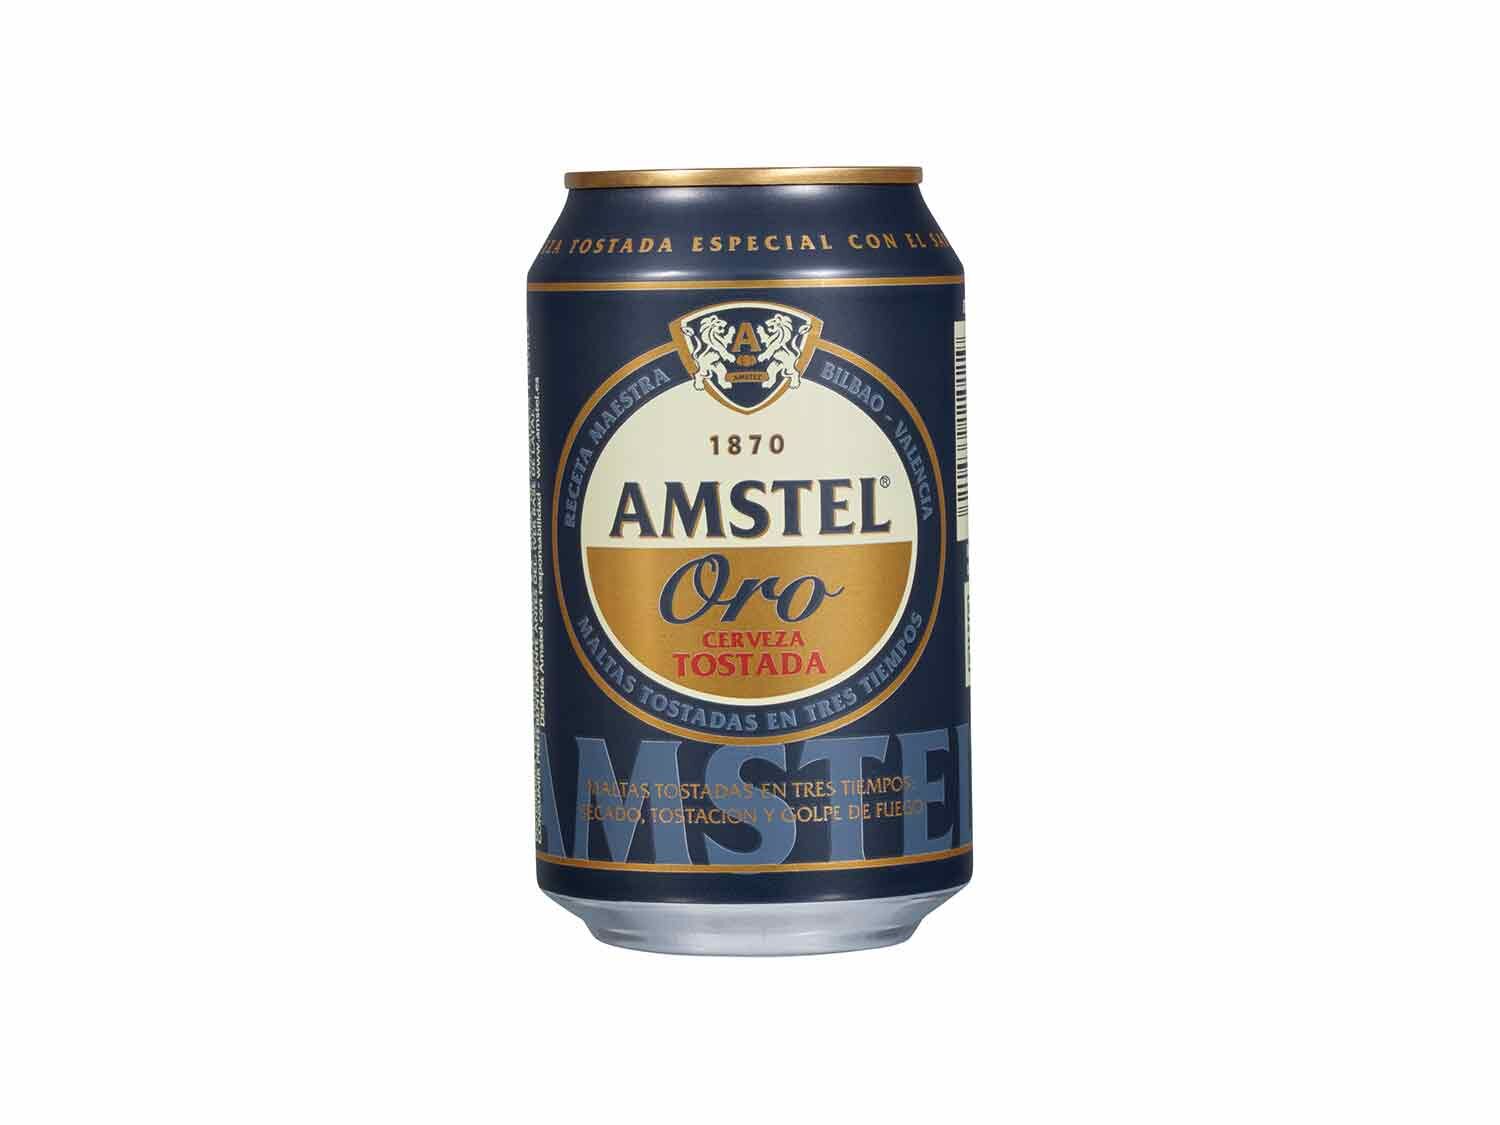 Amstel® Cerveza tostada